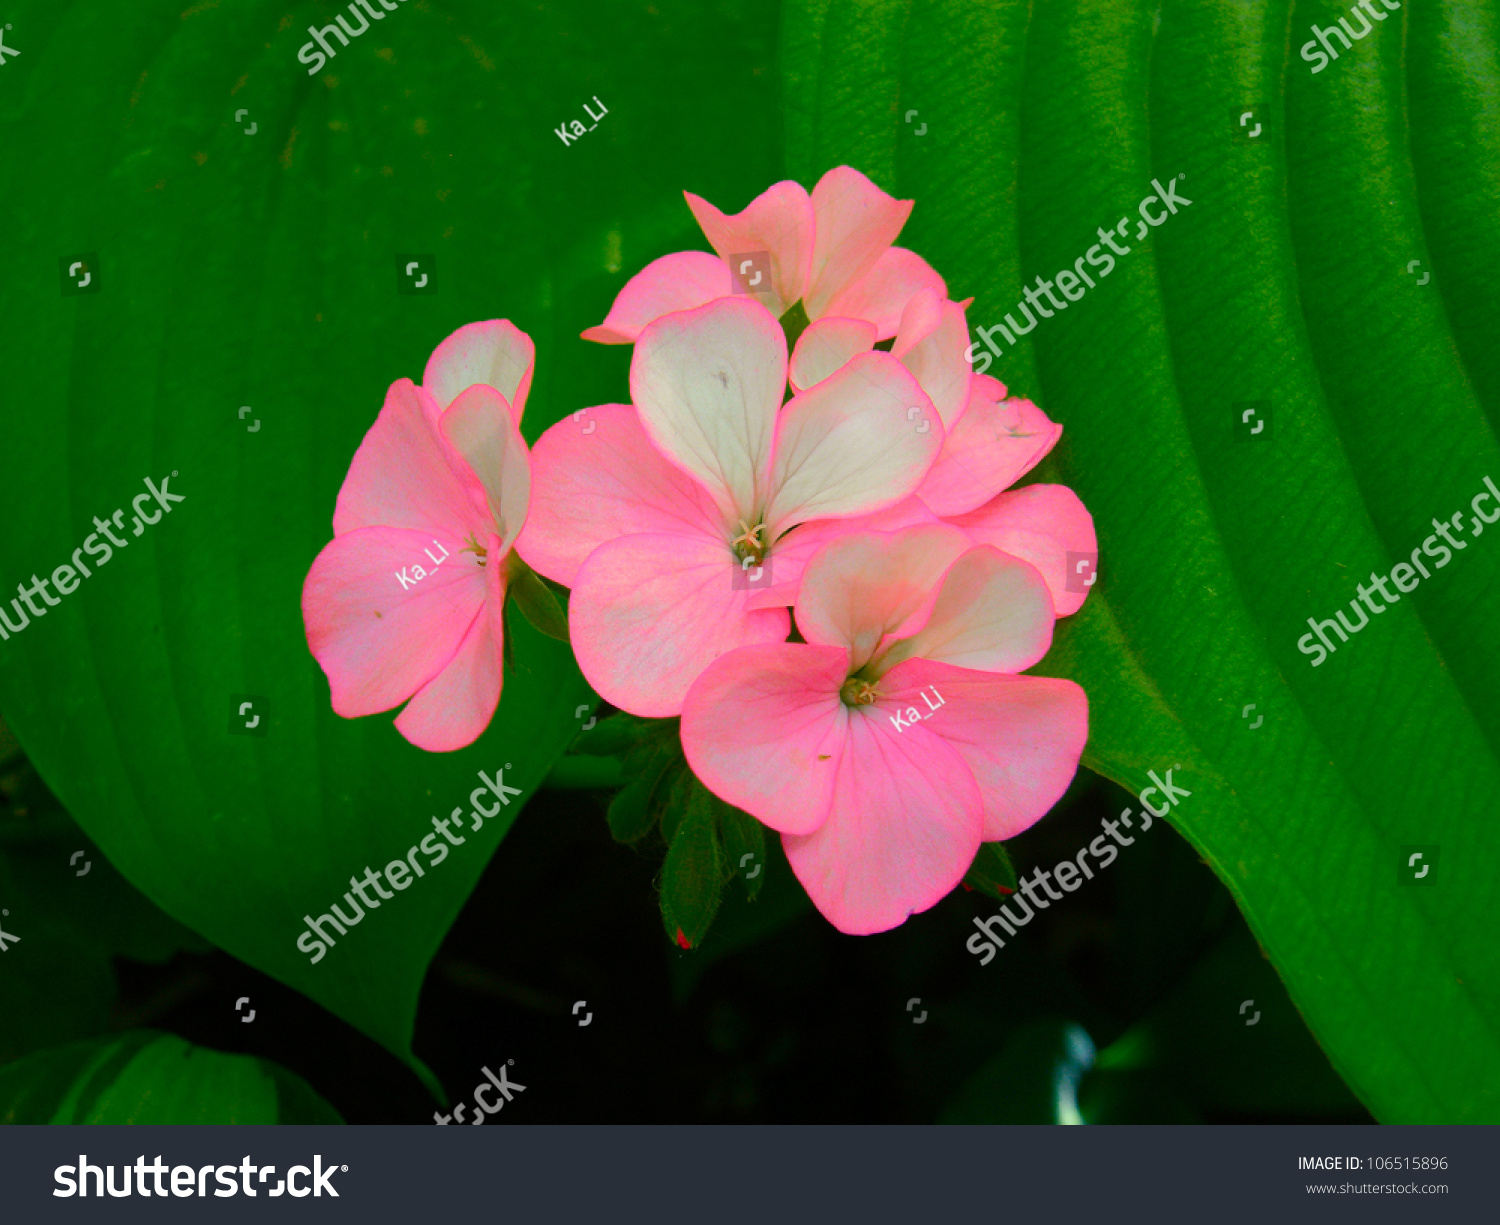 Pink flower close up #106515896